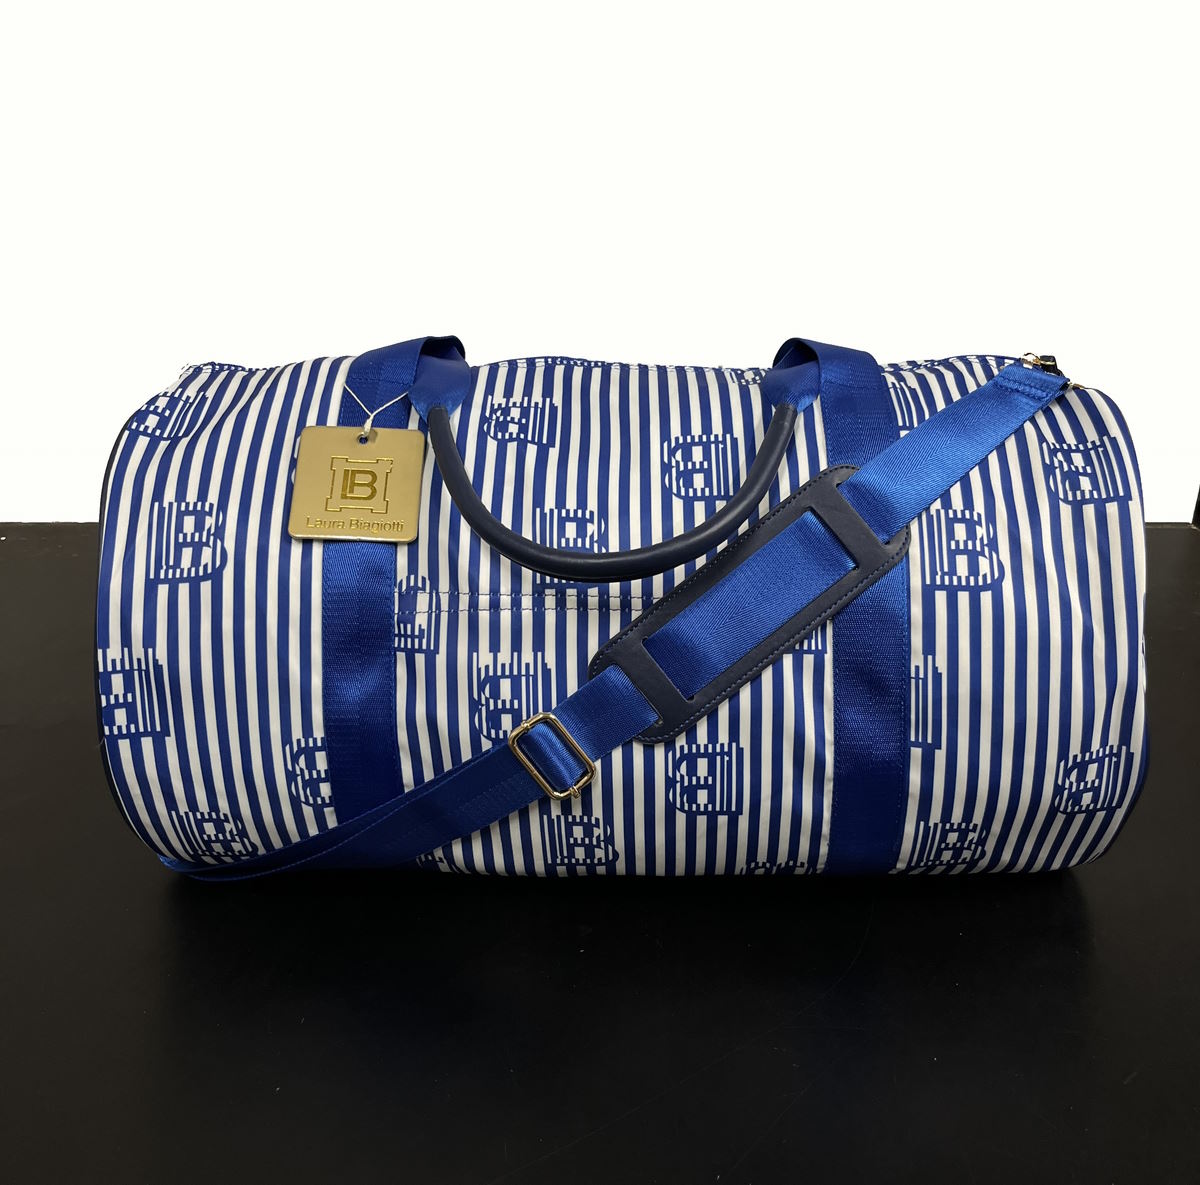 Travel Bag, Brand Laura Biagiotti, art. LB265-1